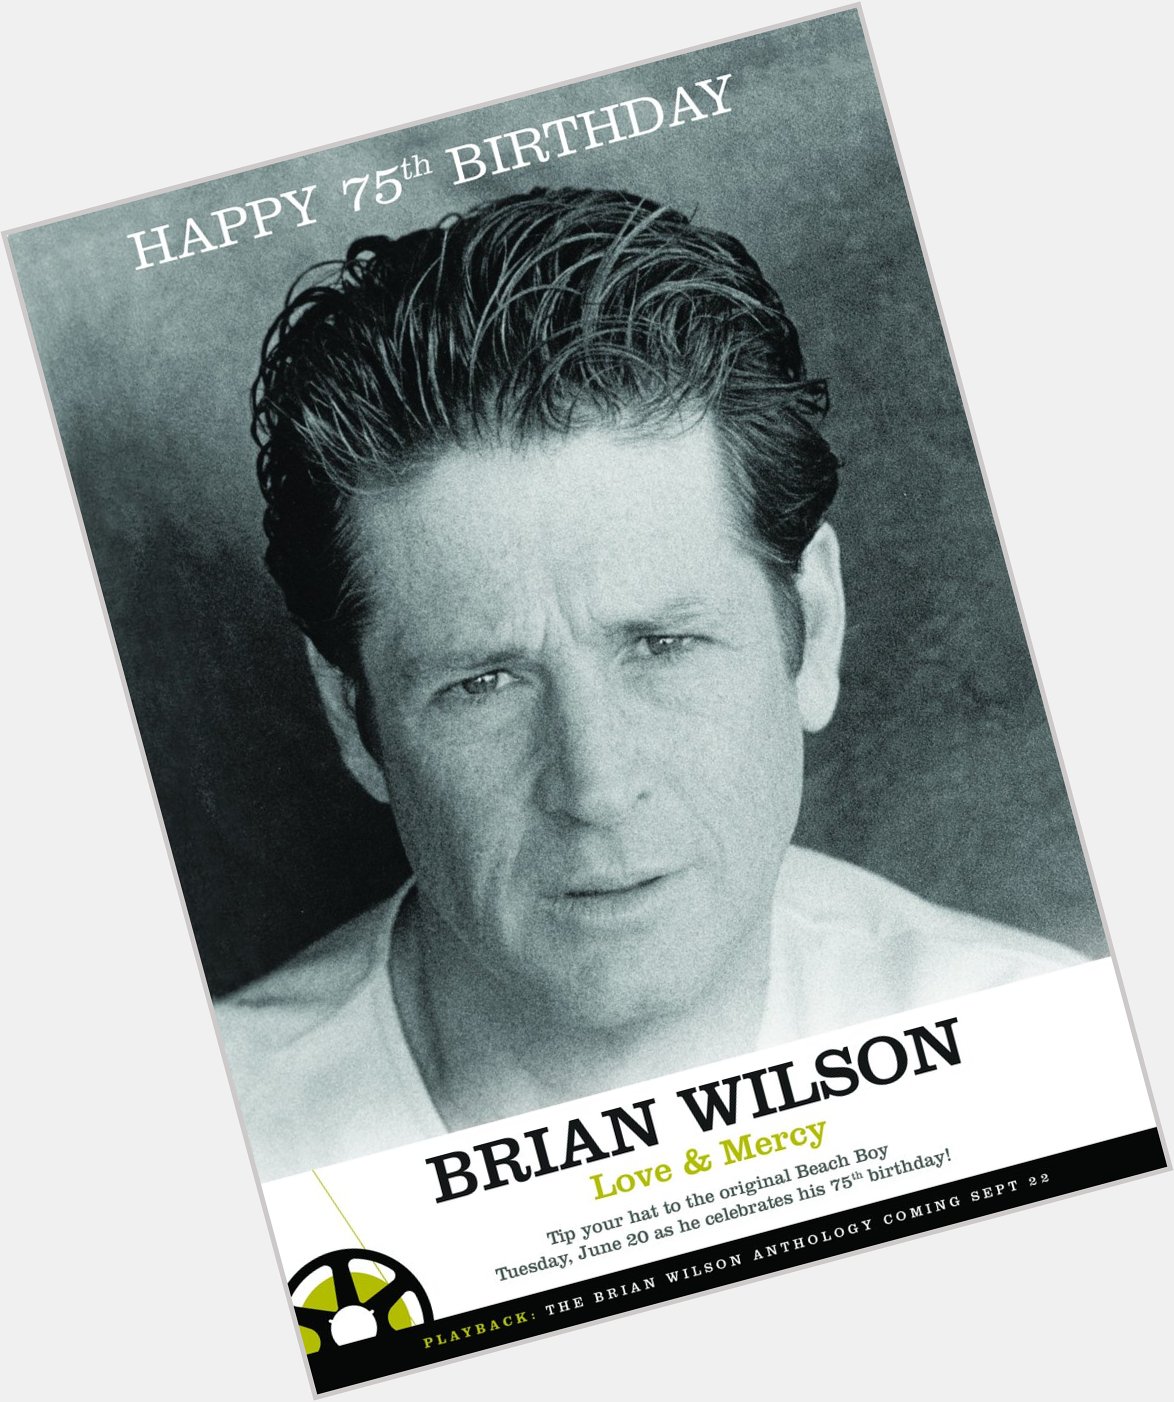 Happy 75th Birthday Brian Wilson!  